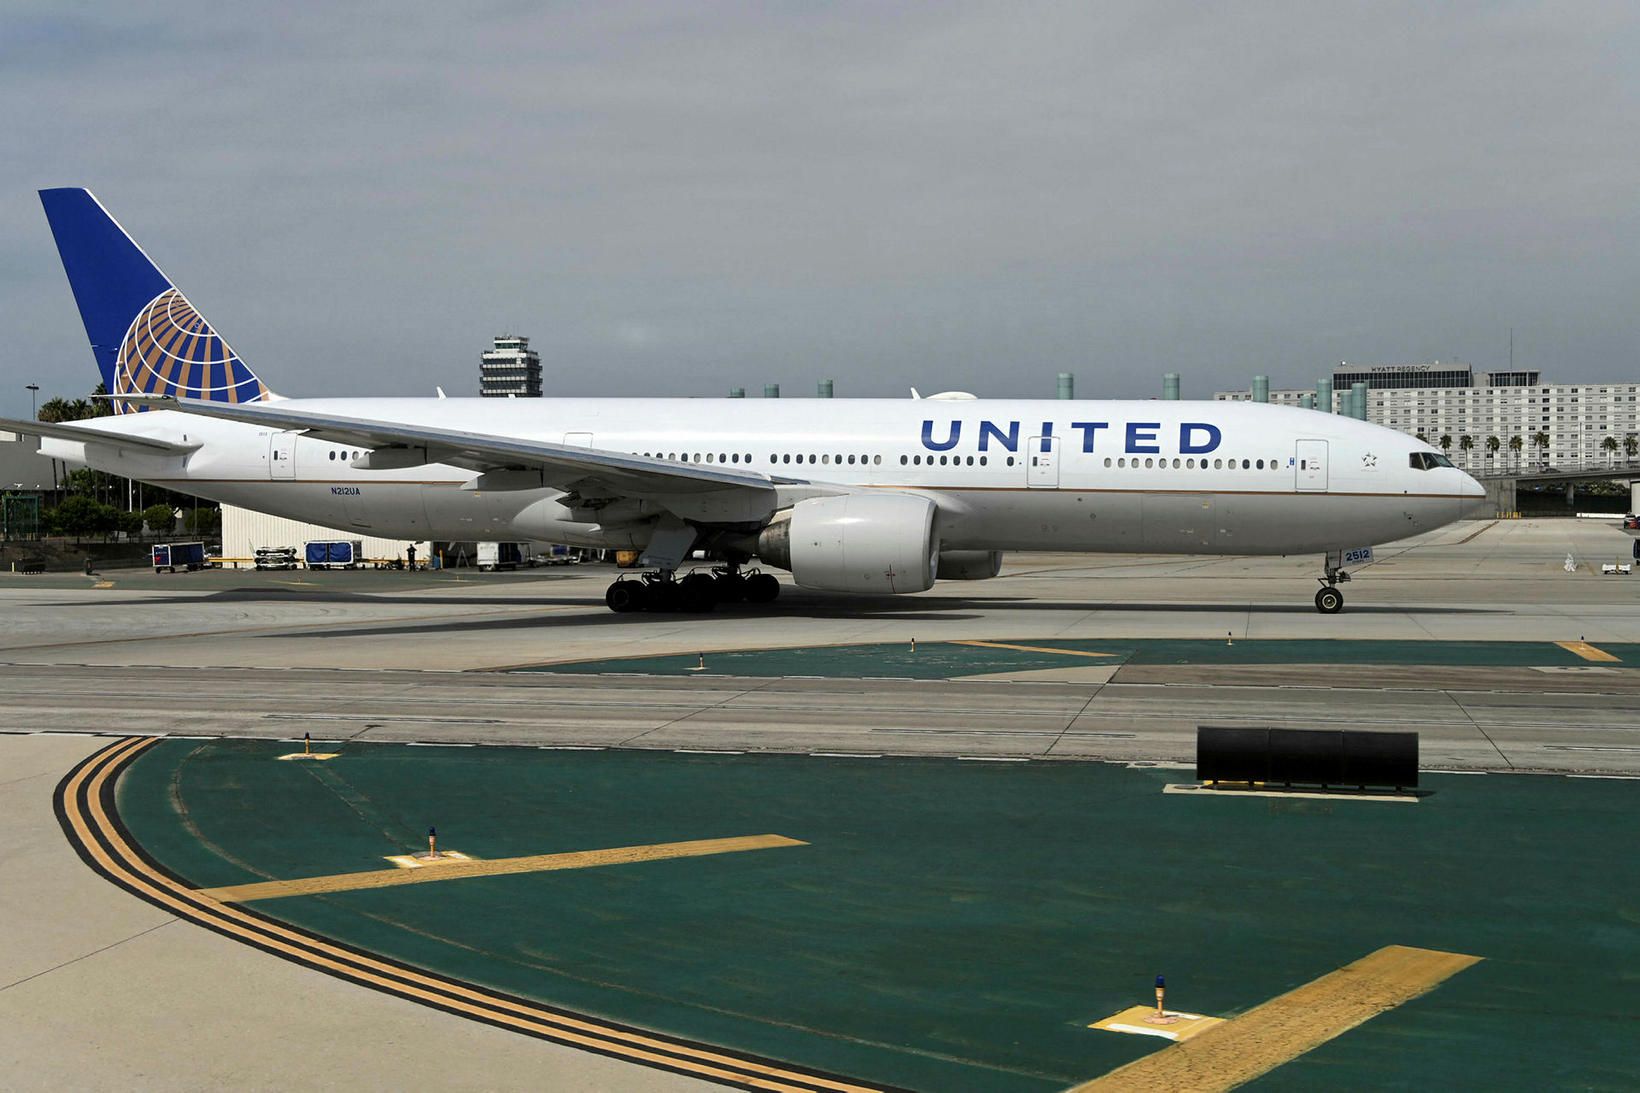 Flugvél United Airlines á LAX-flugvellinum í Los Angeles.